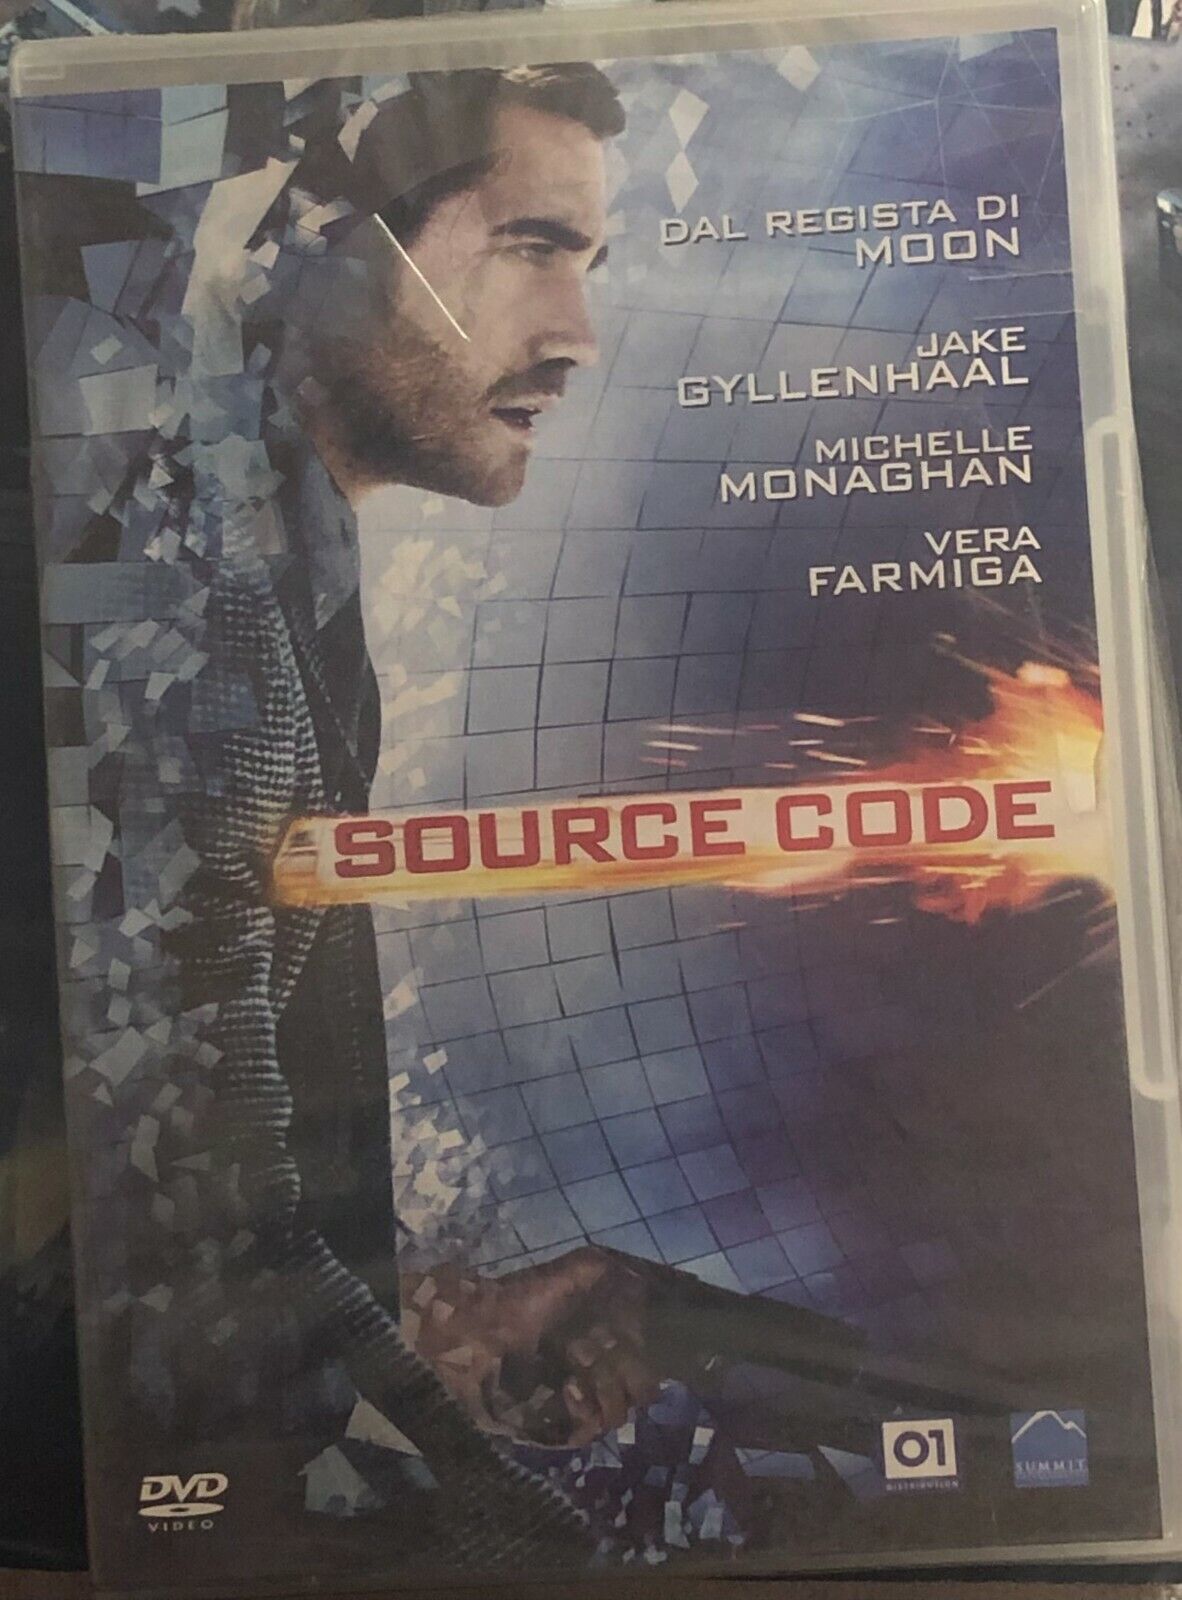 Source code DVD di Duncan Jones,  2011,  01 Distribution